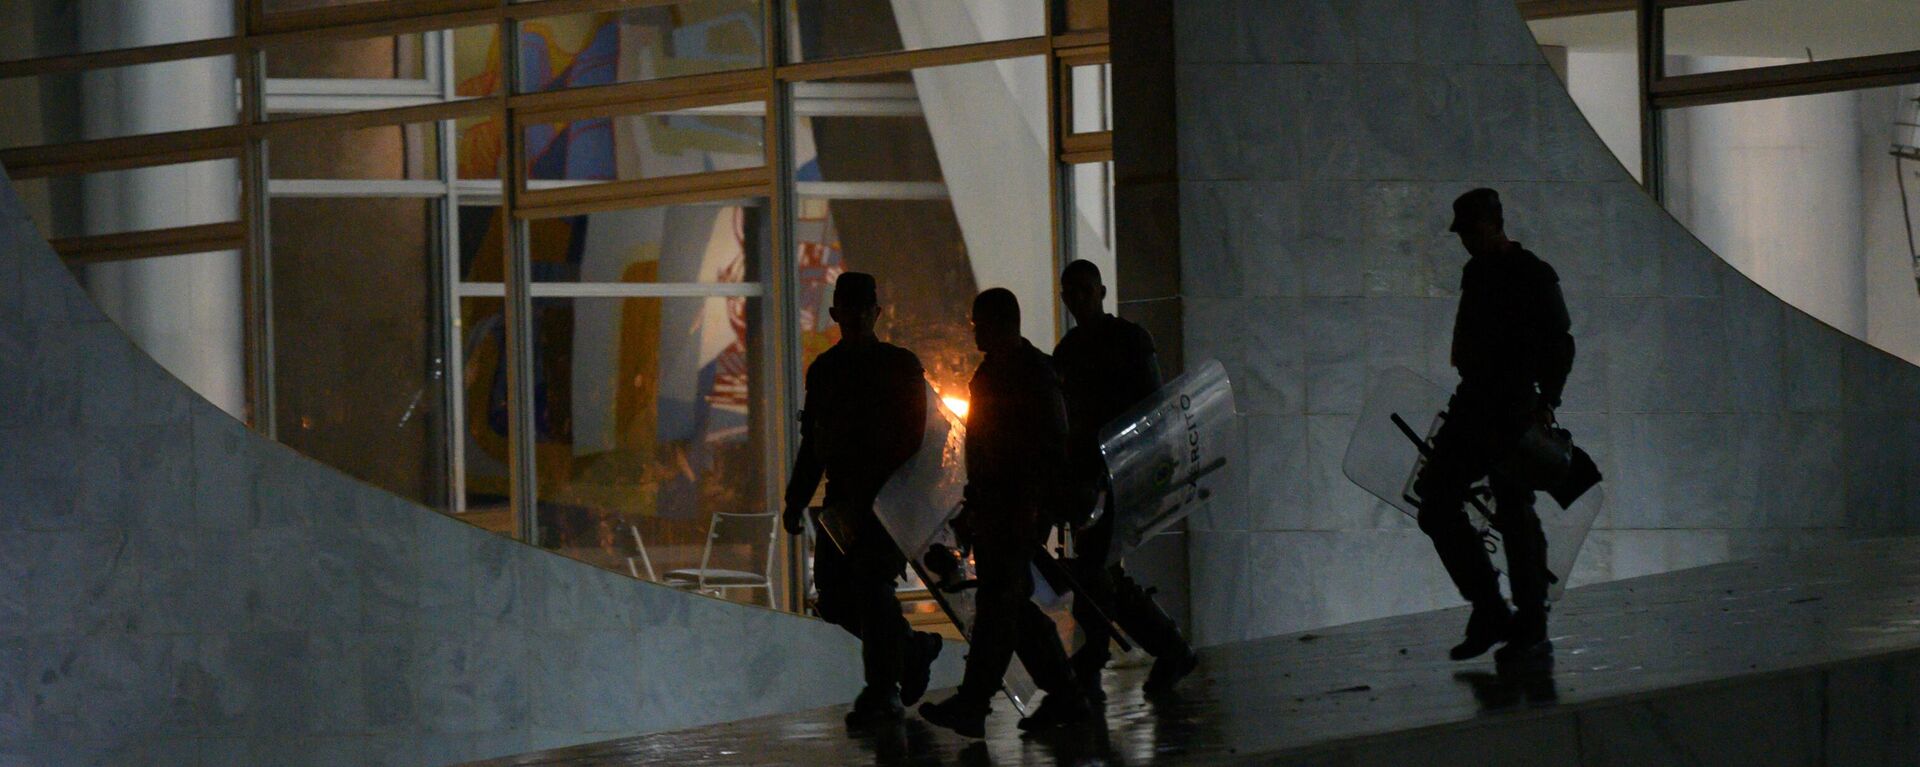 Security officers are seen patrolling Planalto Palace in Brasilia, Brazil, on January 8, 2023. - Sputnik International, 1920, 09.01.2023